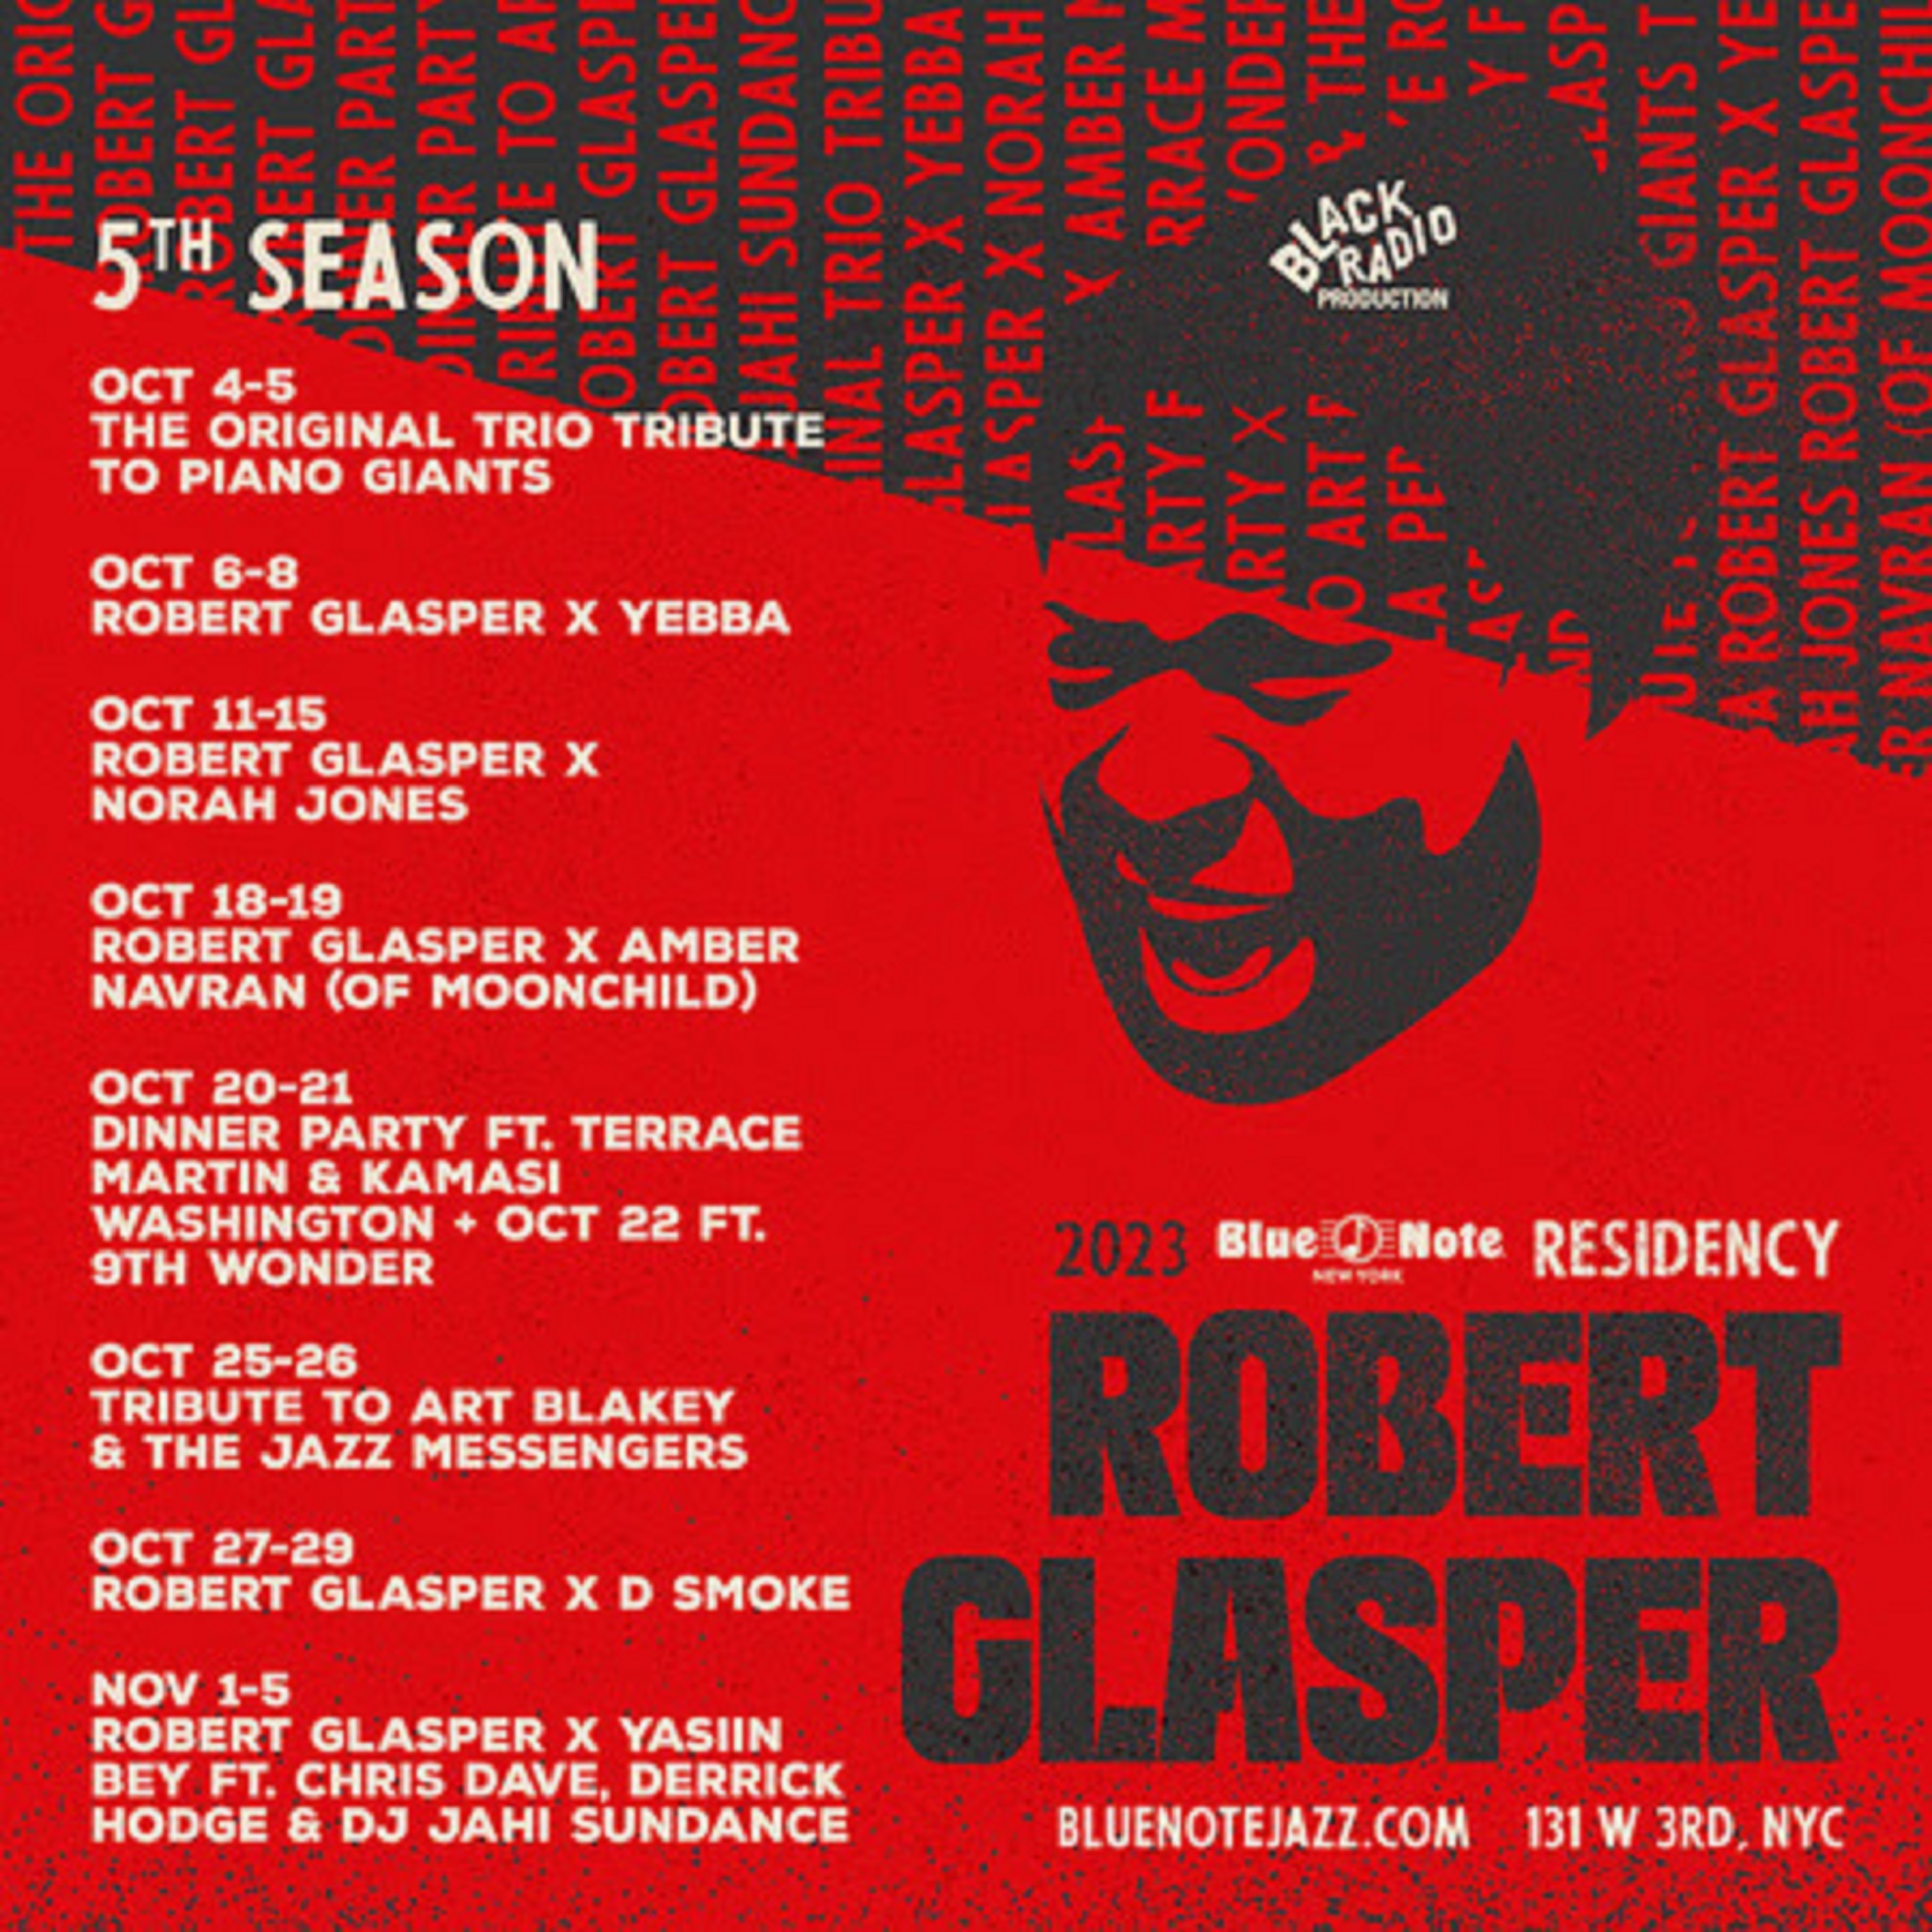 Blue Note Jazz Club Presents Robert Glasper's Fifth Annual "Robtober" Residency This Oct/Nov